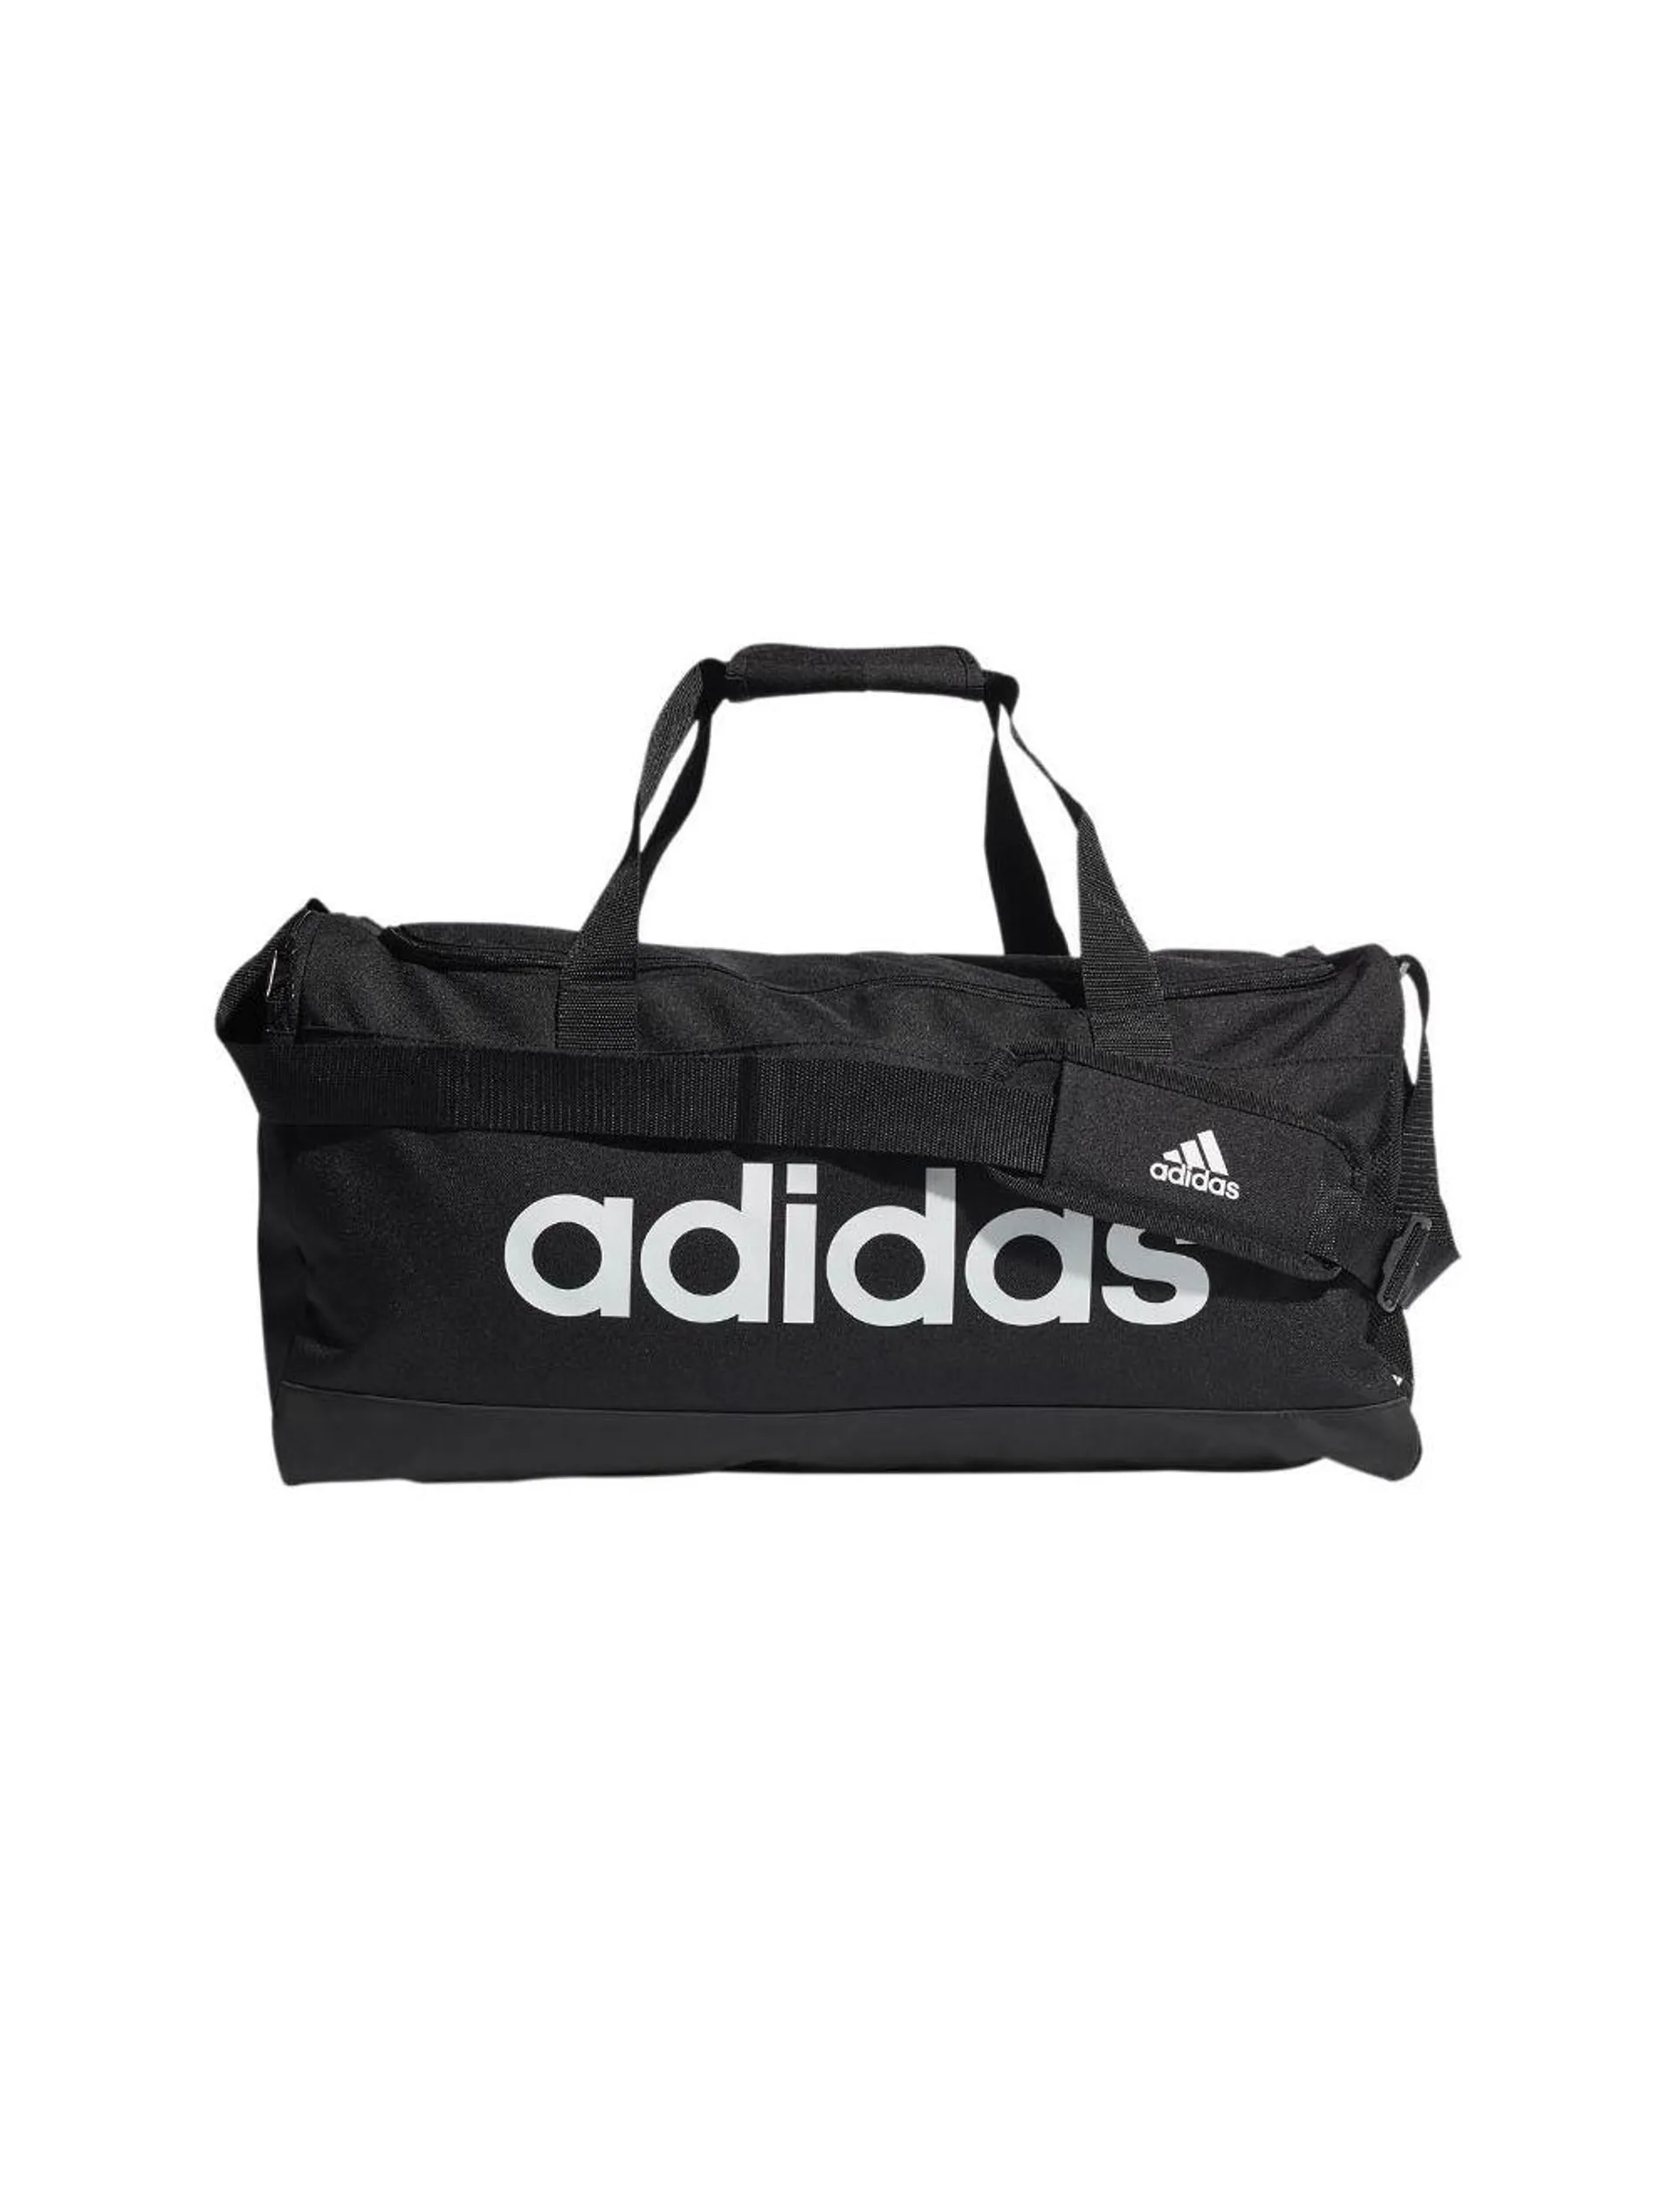 adidas Performance Essentials Logo Duffel Bag Black White